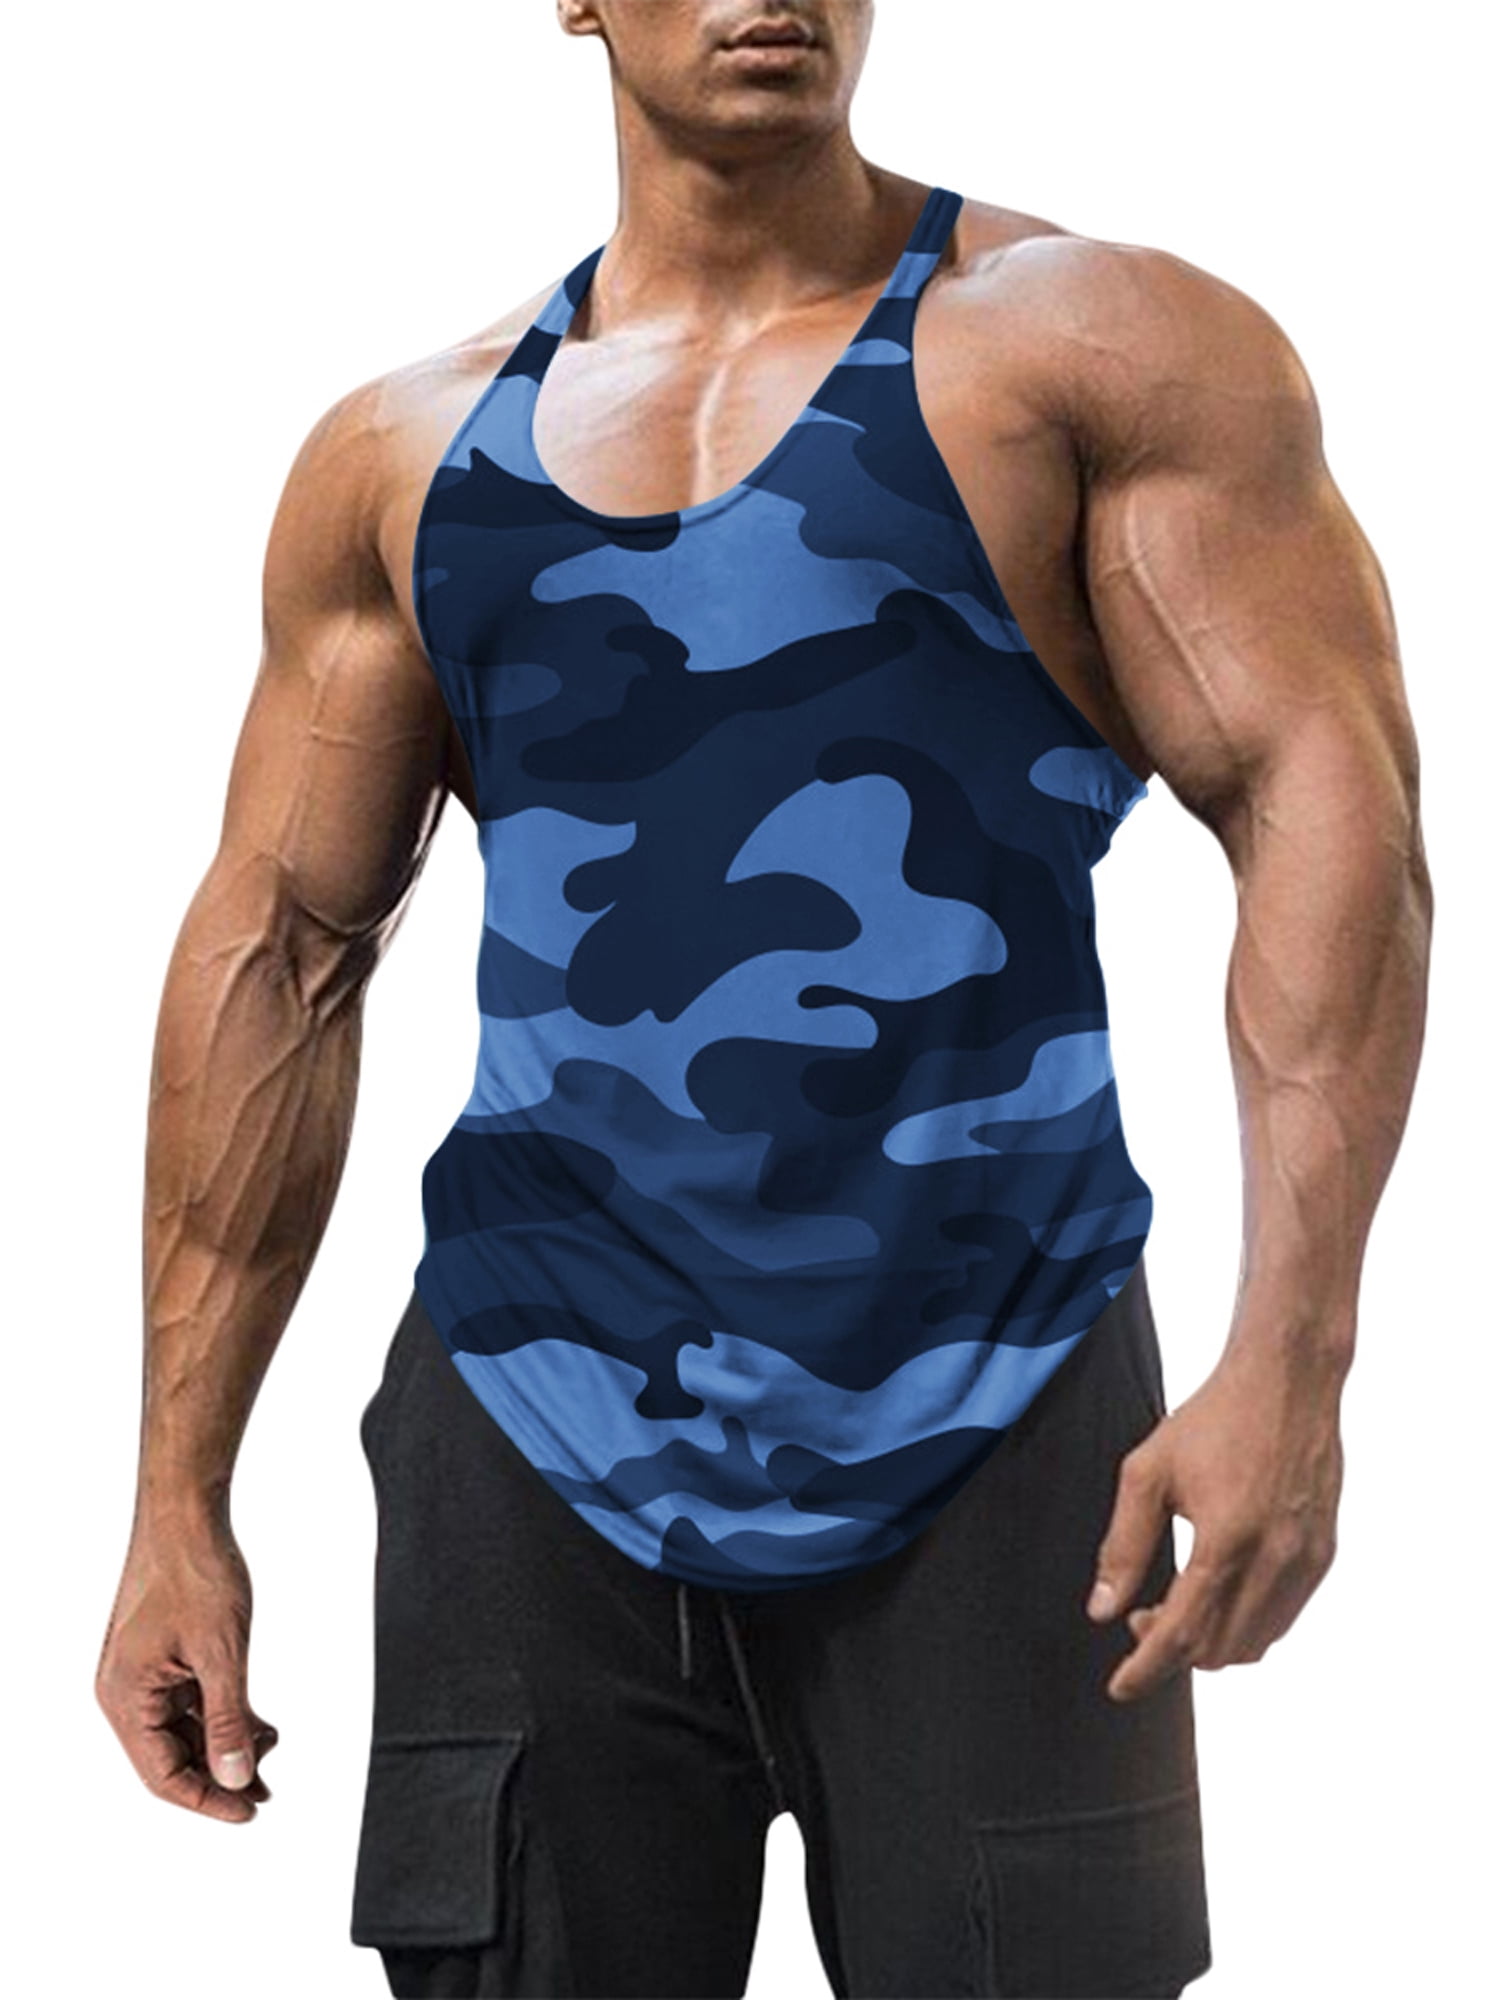 Remikst Men's Y-Back Tank Top Sleeveless Dry Fit Gym Shirt,M-2XL 